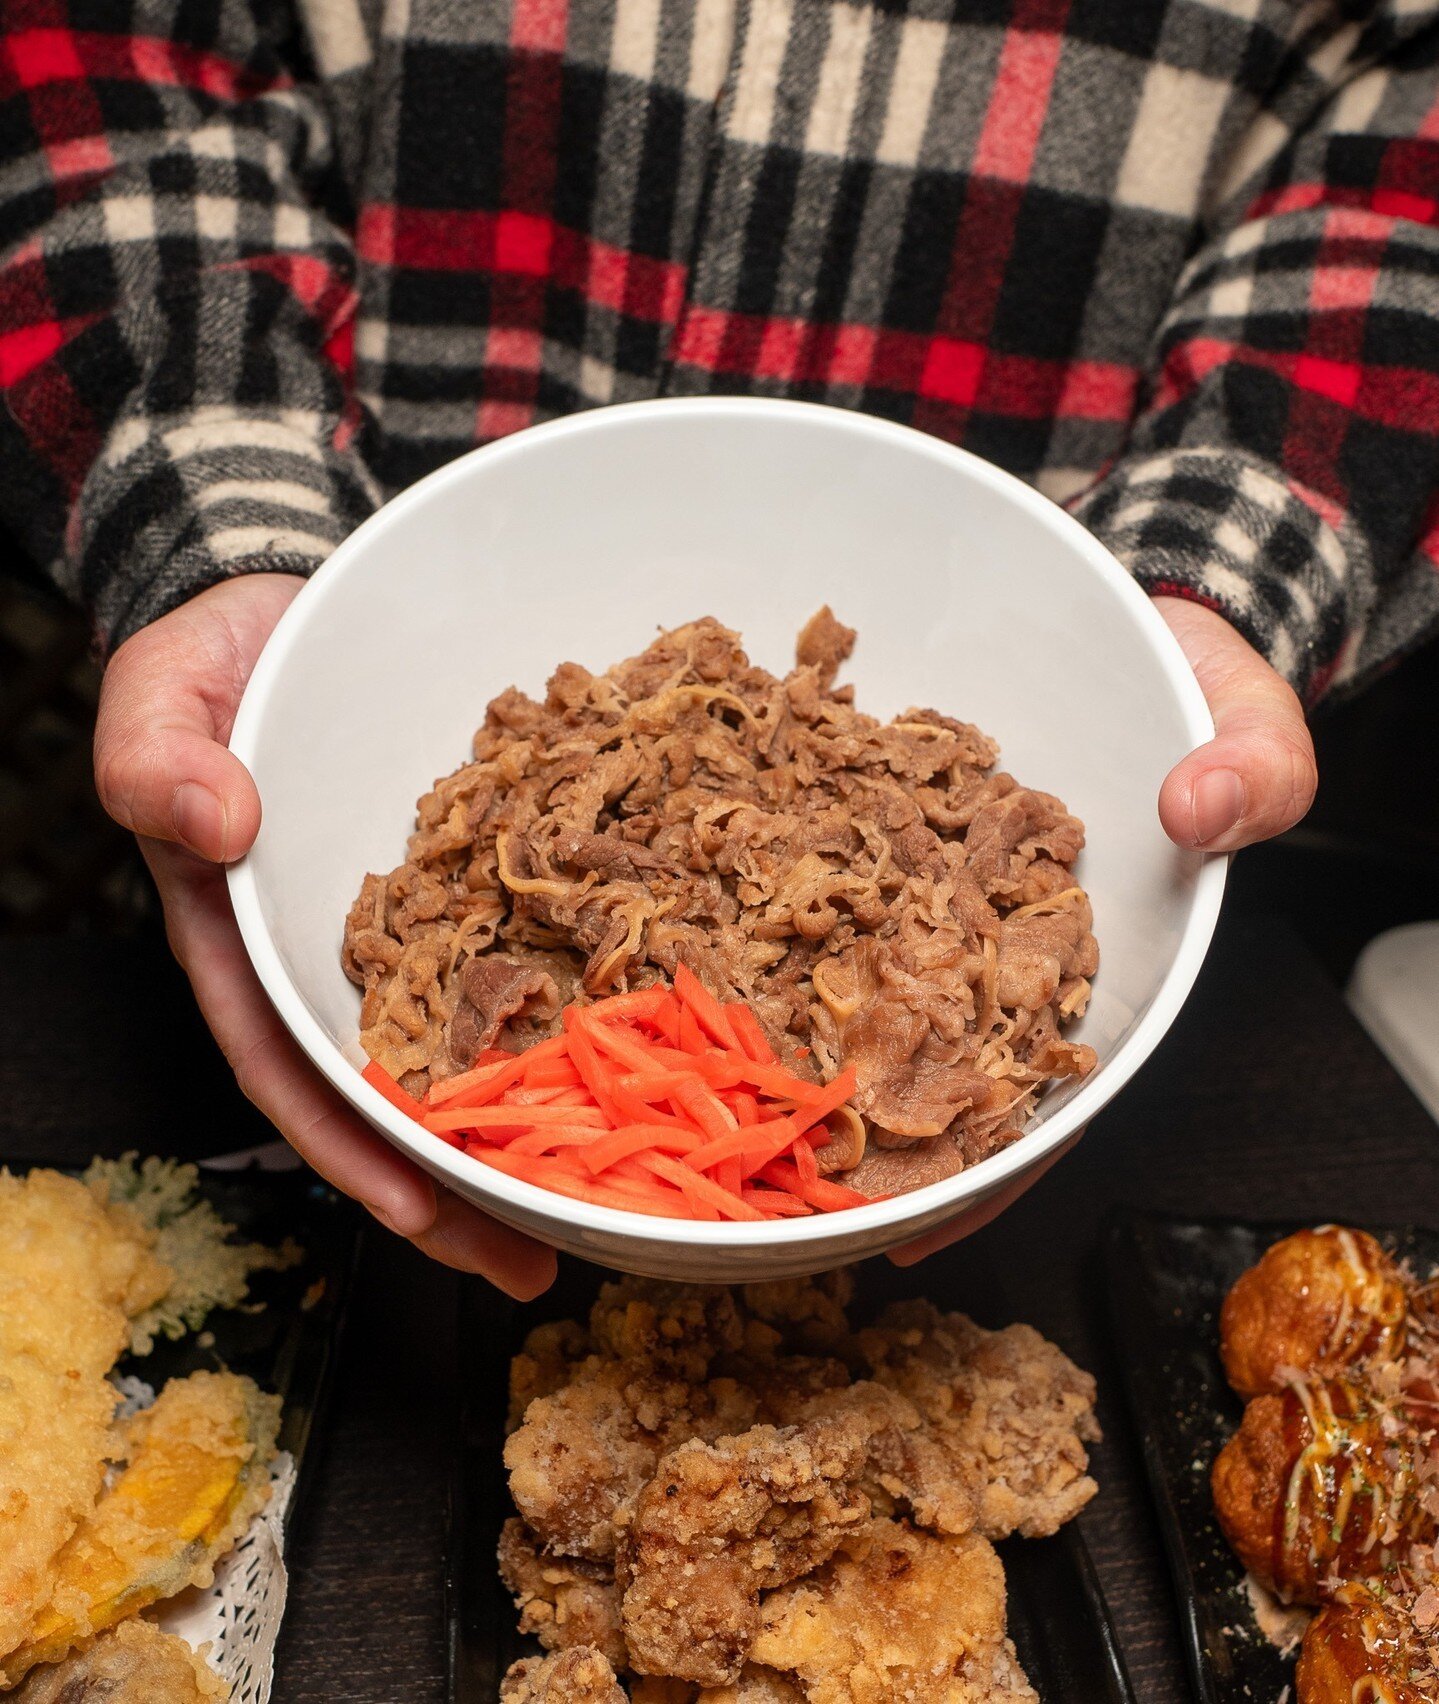 Bowlful of joy: rice, meat, and everything nice! Visit us today! #FoodieFindsLA 😋🍚 

👇 Freshly homemade noodles 
◾️◽️◾️◽️◾️◽️◾️◽️◾️◽️
🍜 ᴍᴀʀᴜɢᴀᴍᴇ ᴍᴏɴᴢᴏ ʟᴀ
⏰ ᴍᴏɴ - ᴛʜᴜʀꜱ : 11:30 ᴀᴍ - 9:00 ᴘᴍ 
⏰ ꜰʀɪ - ꜱᴜɴ: 11:30 ᴀᴍ - 10:00 ᴘᴍ
📍 329 ᴇᴀꜱᴛ 1ꜱᴛ ꜱᴛ. ʟɪᴛ